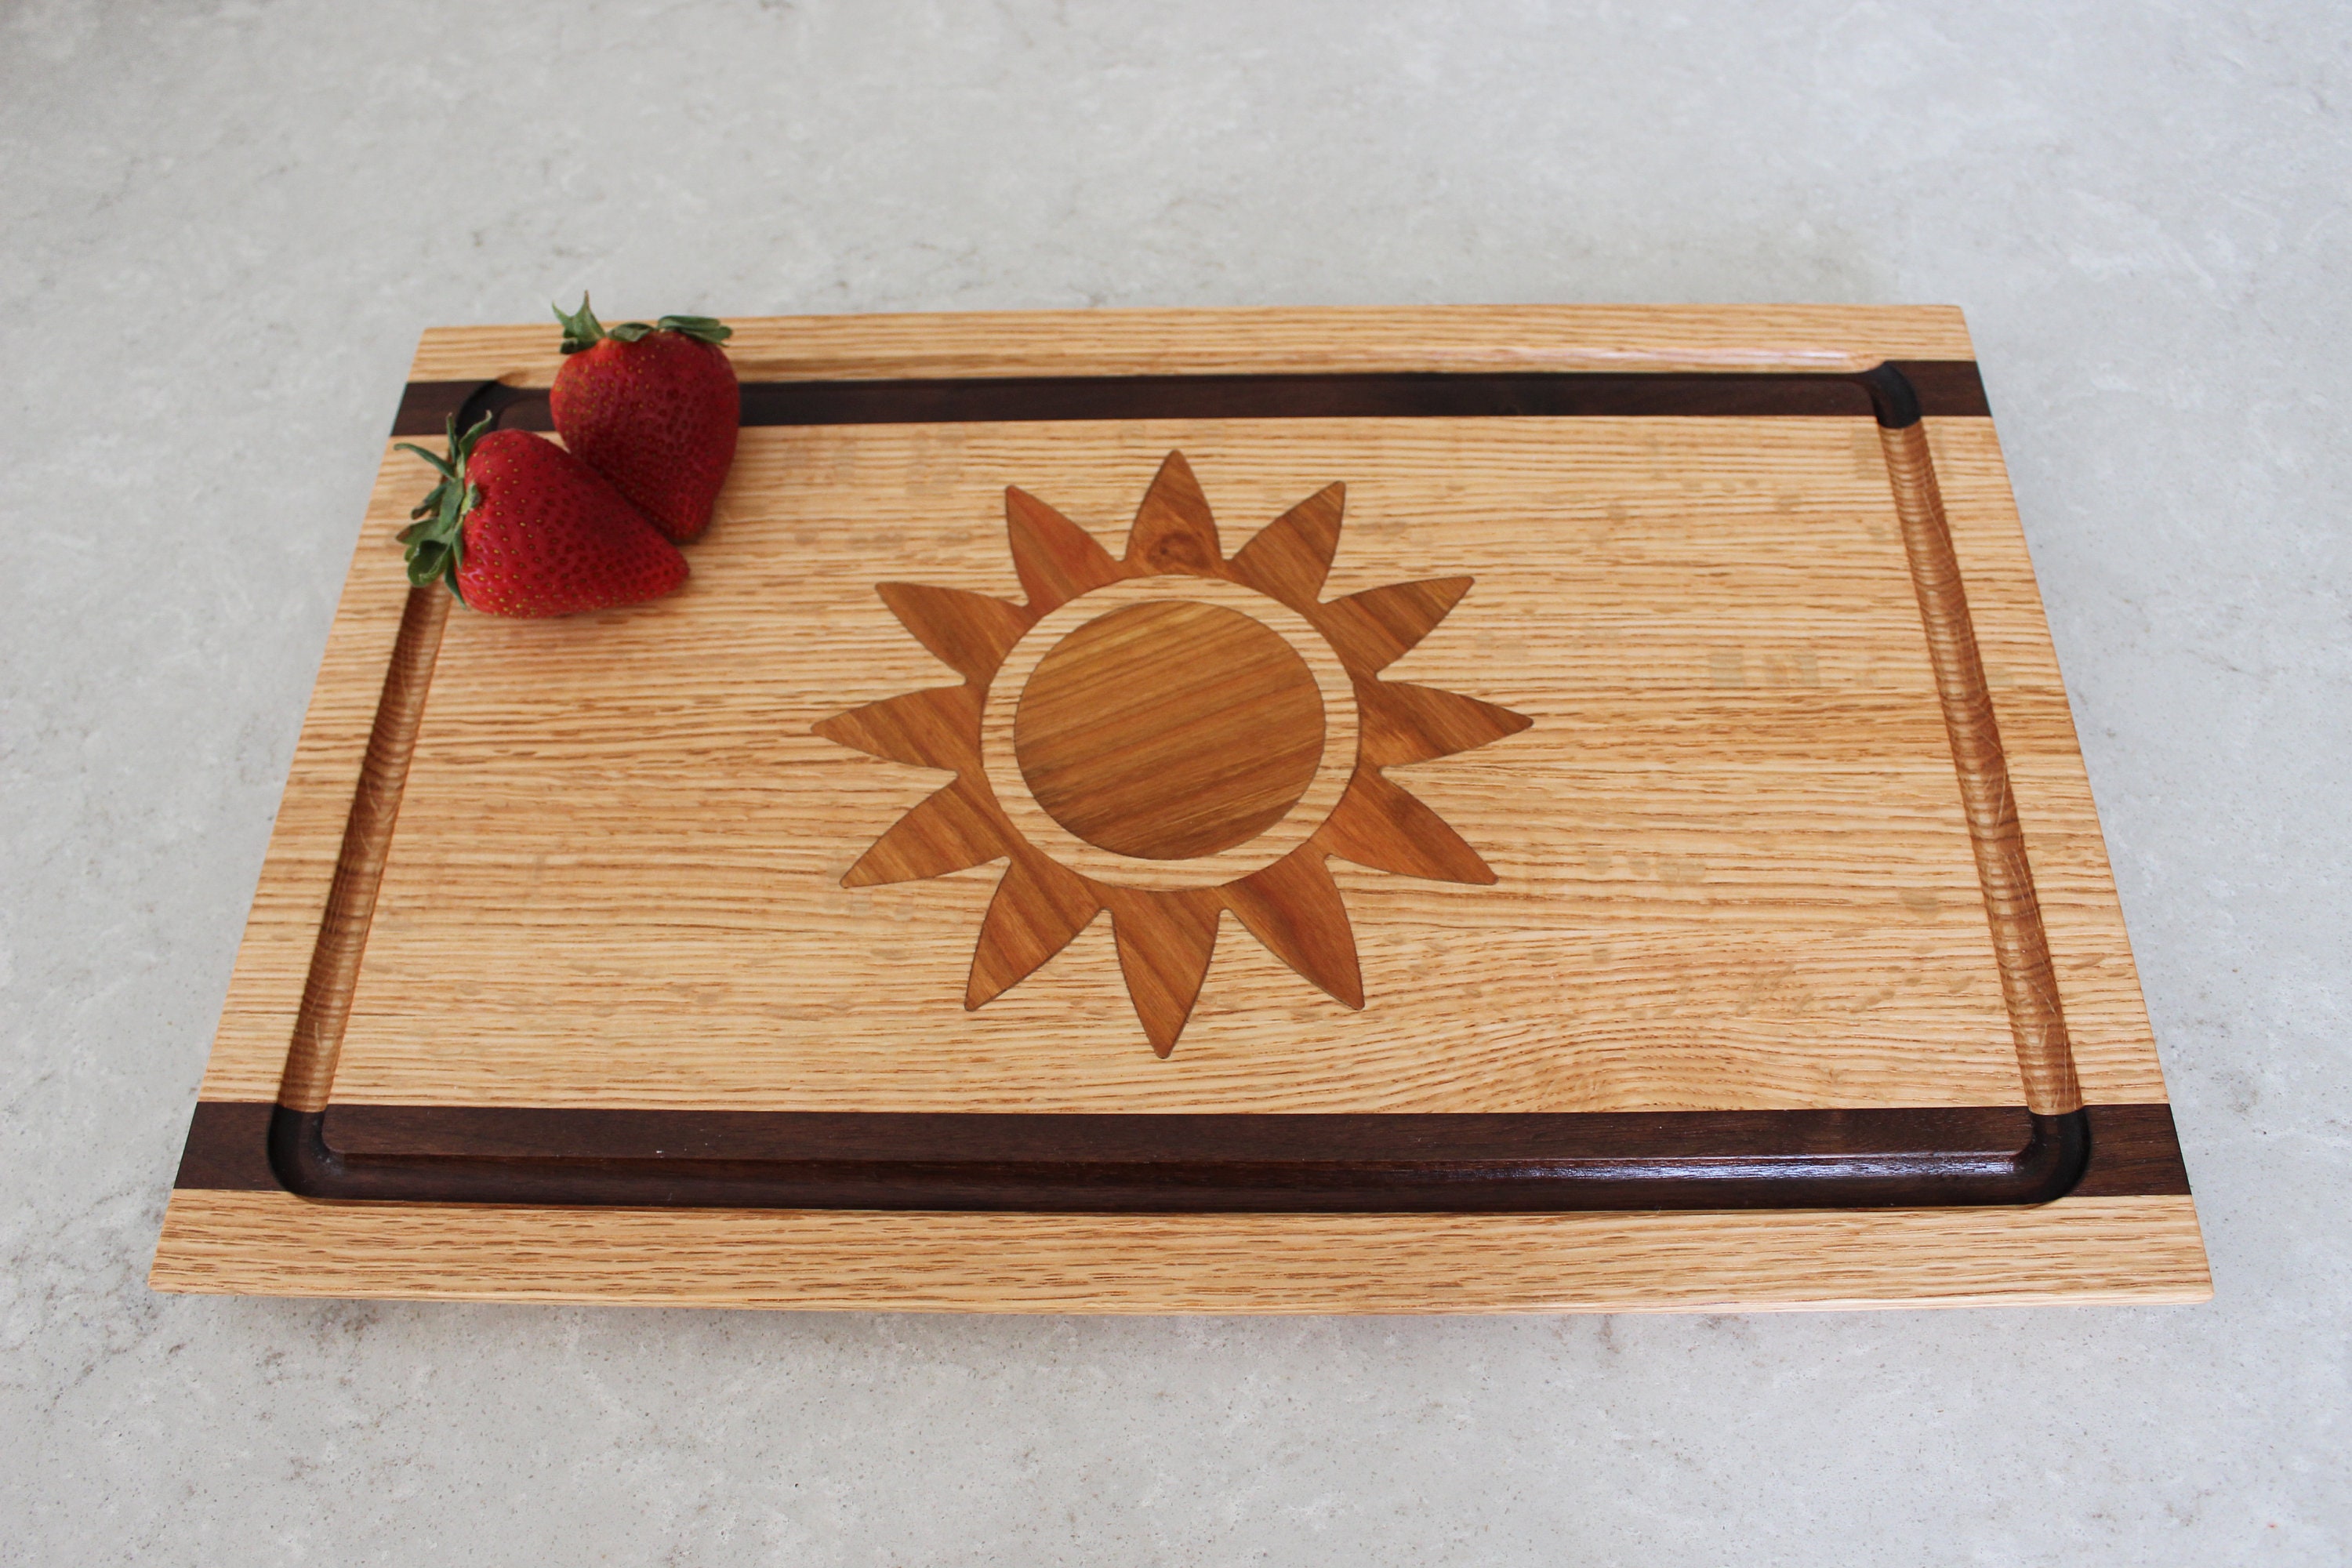 Sunflower Cutting Board 30x20 cm, Golden - Klippan Yllefabrik